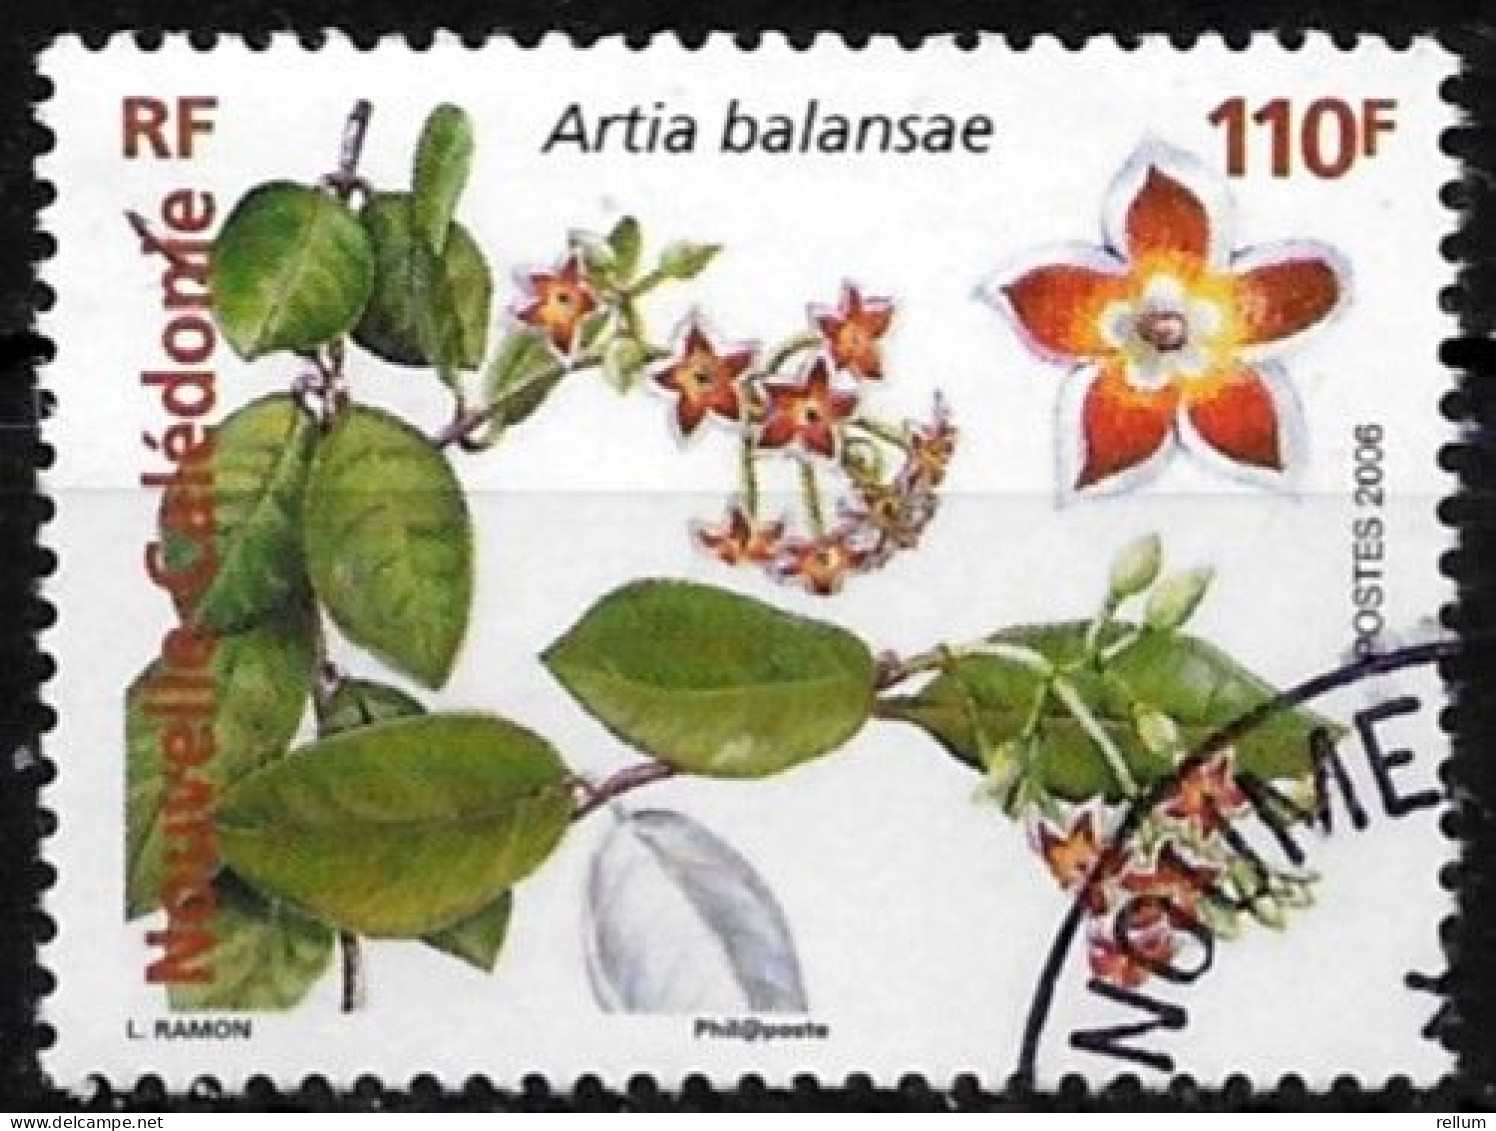 Nouvelle Calédonie 2006 - Yvert Et Tellier Nr. 981 - Michel Nr. 1392 Obl. - Used Stamps